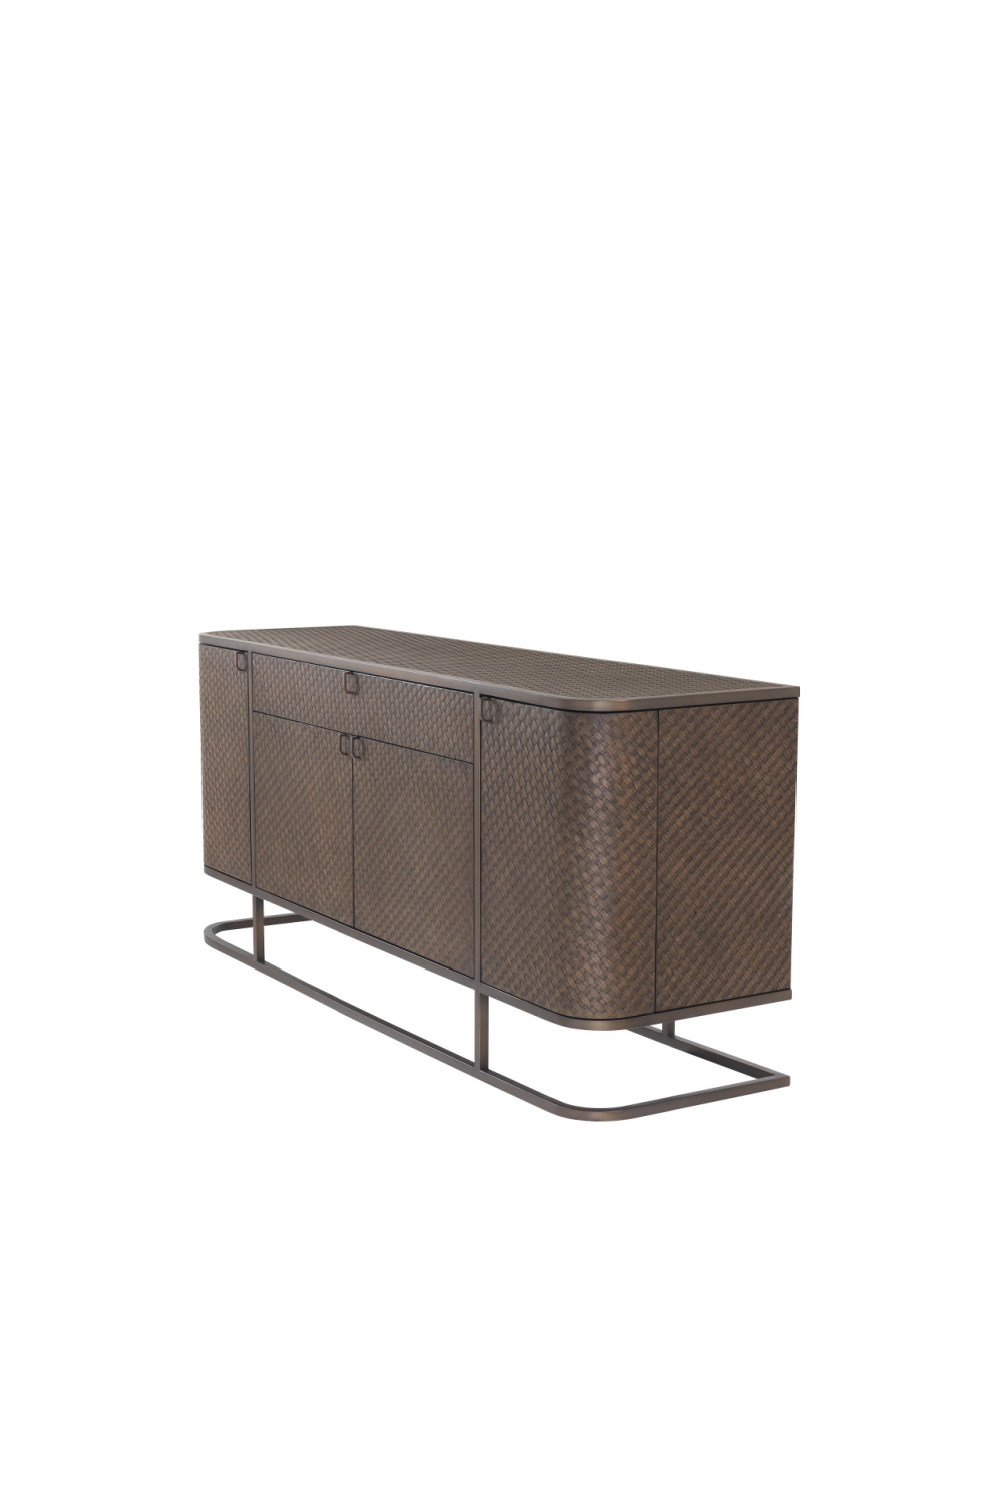 Woven Oak Dresser | Eichholtz Napa Valley | #1 Eichholtz Retailer